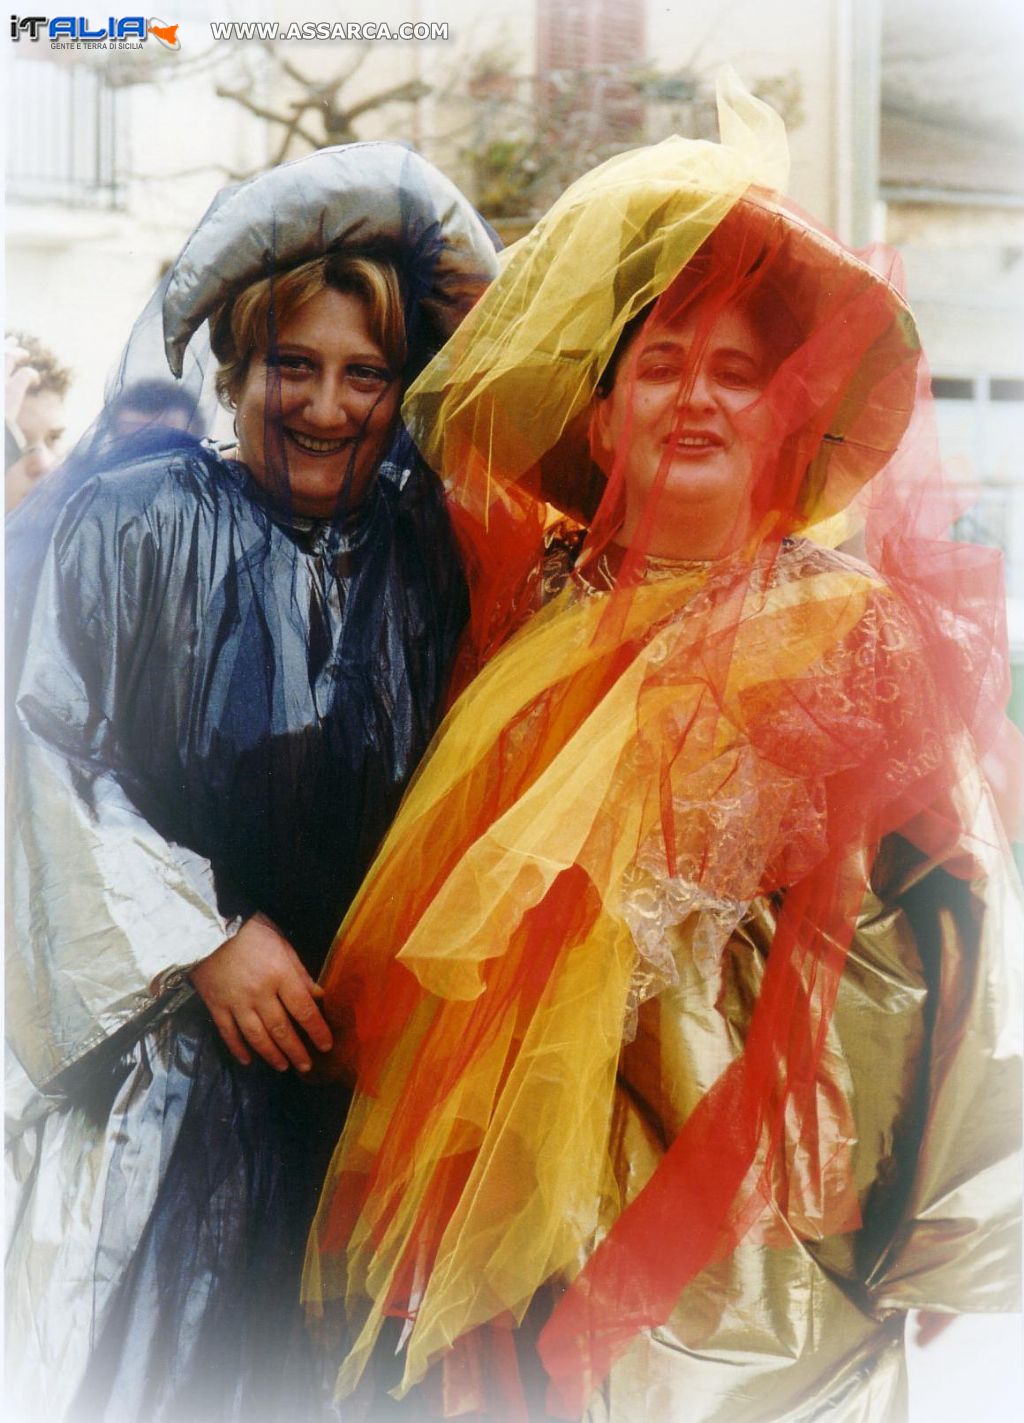 Carnevale 2001